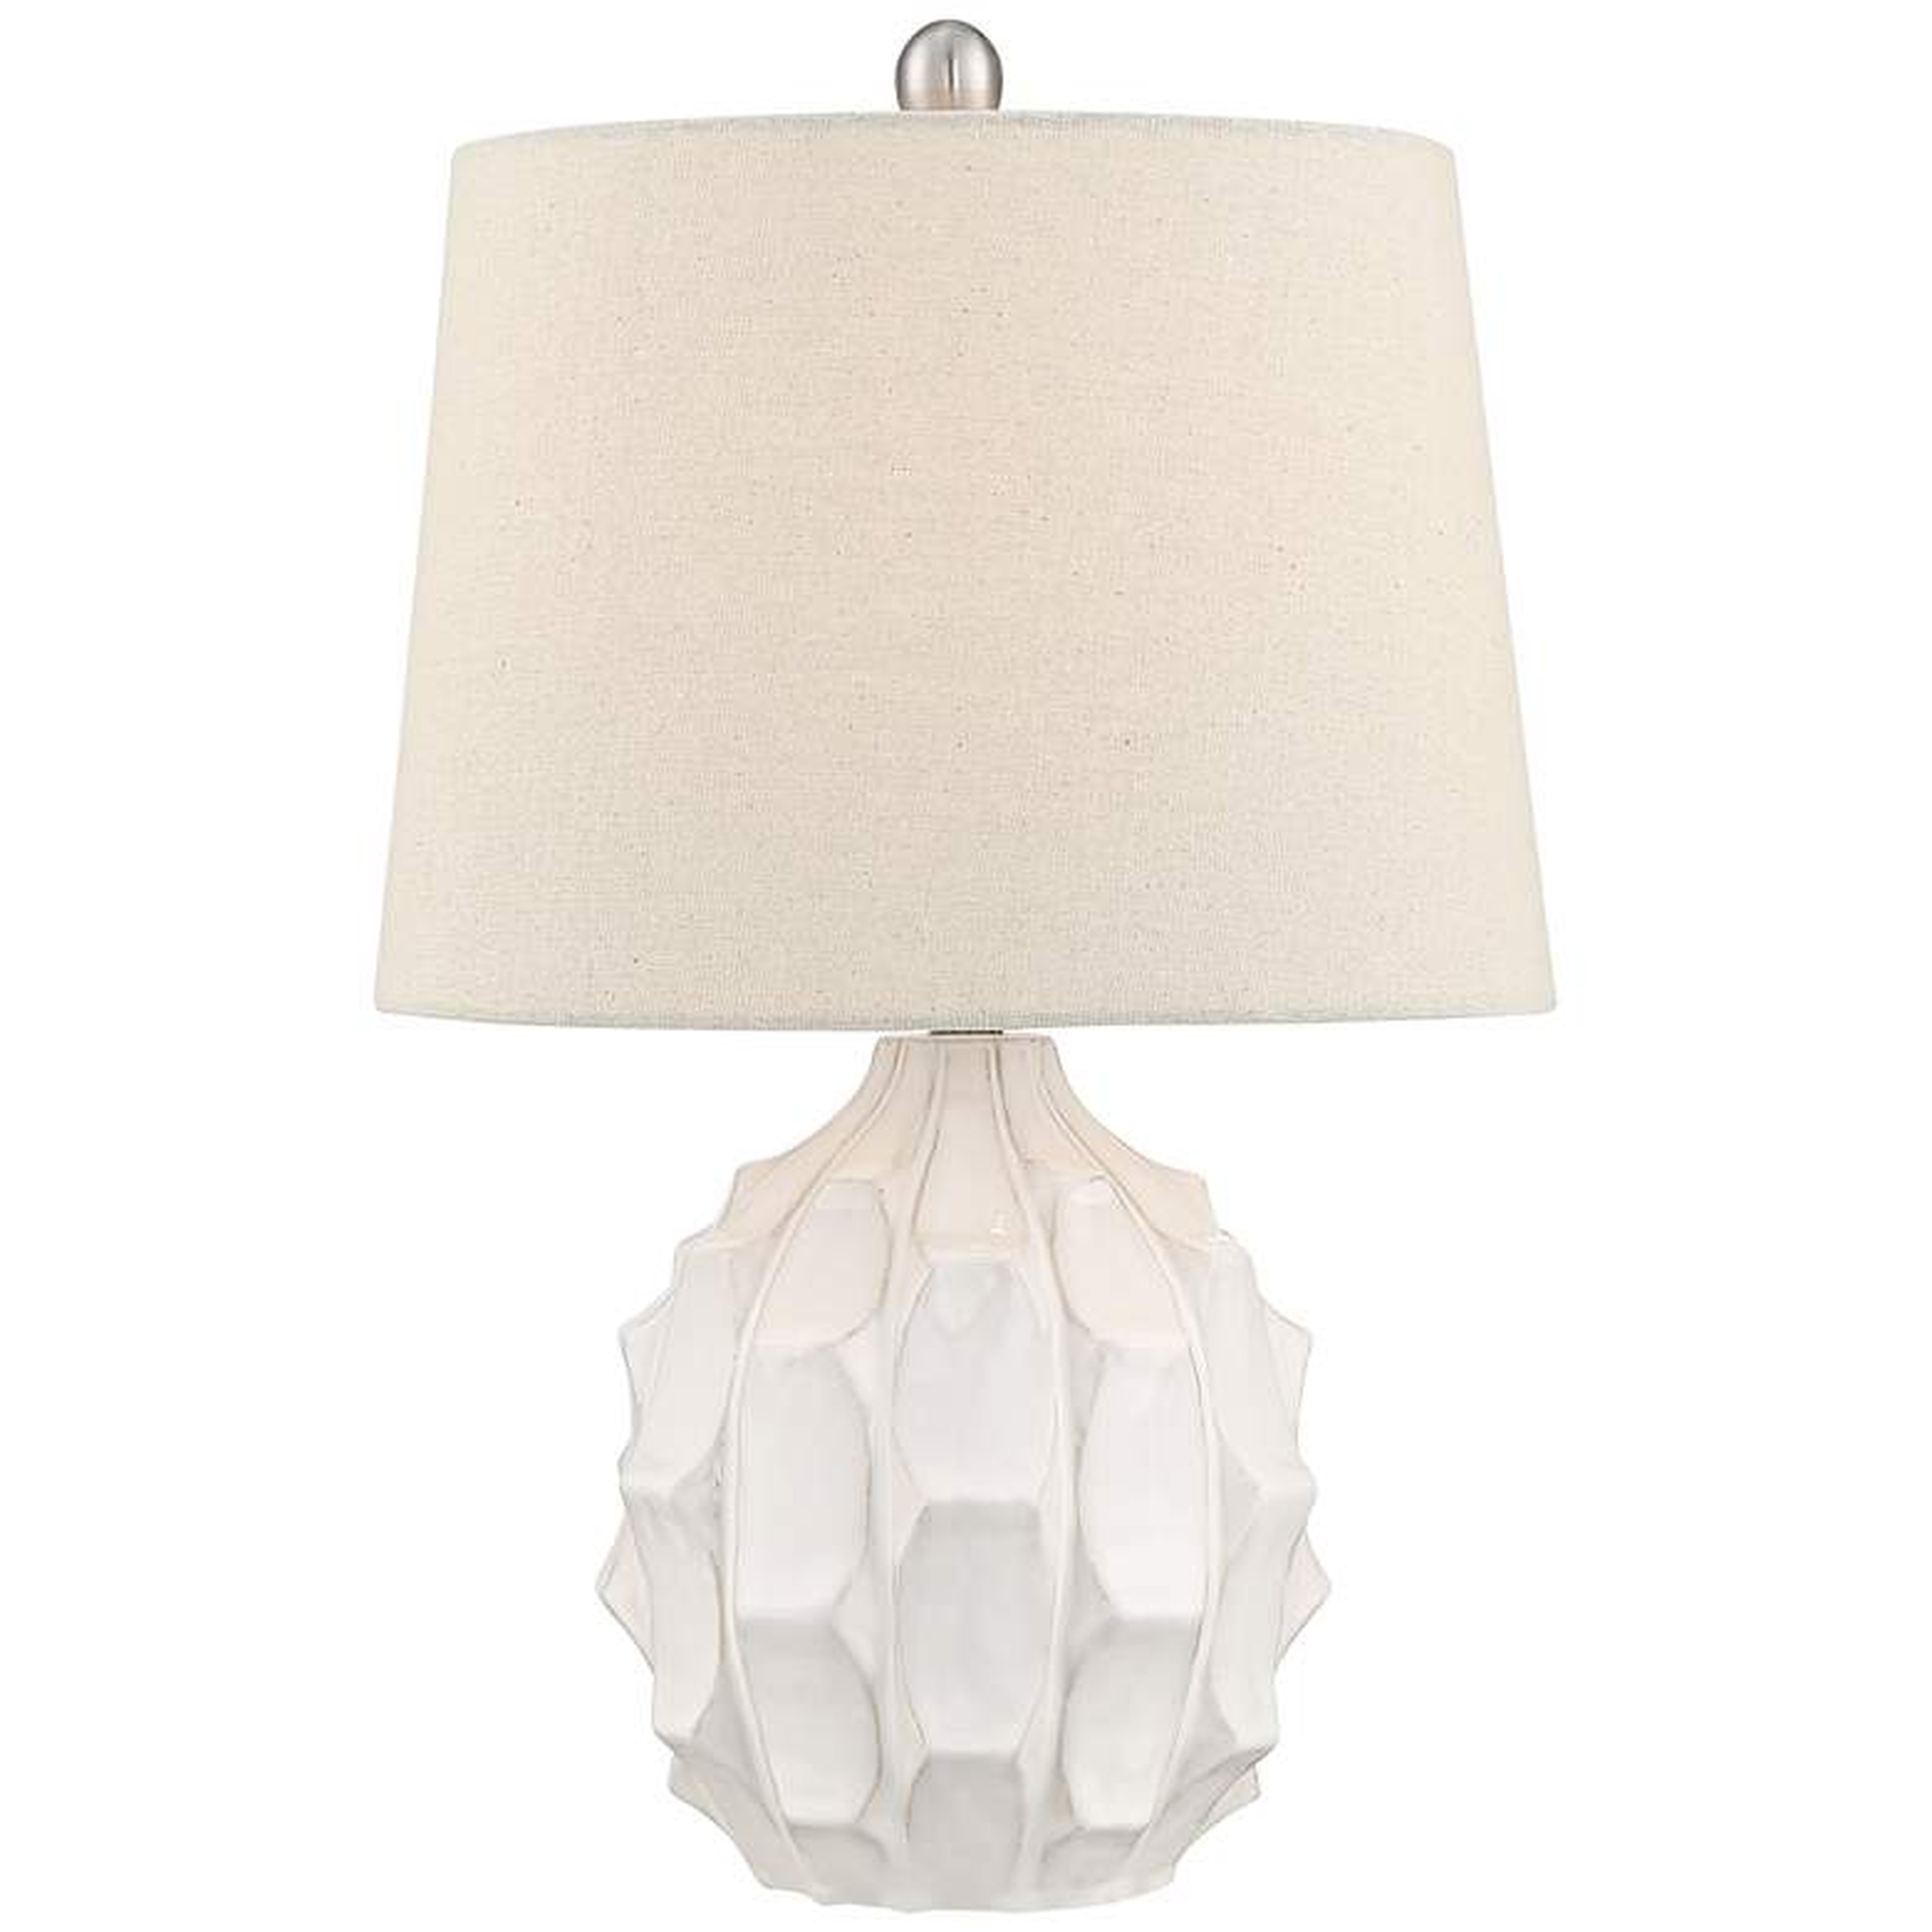 Ellen Mid-Century White Ceramic Table Lamp - Style # 39T35 - Lamps Plus